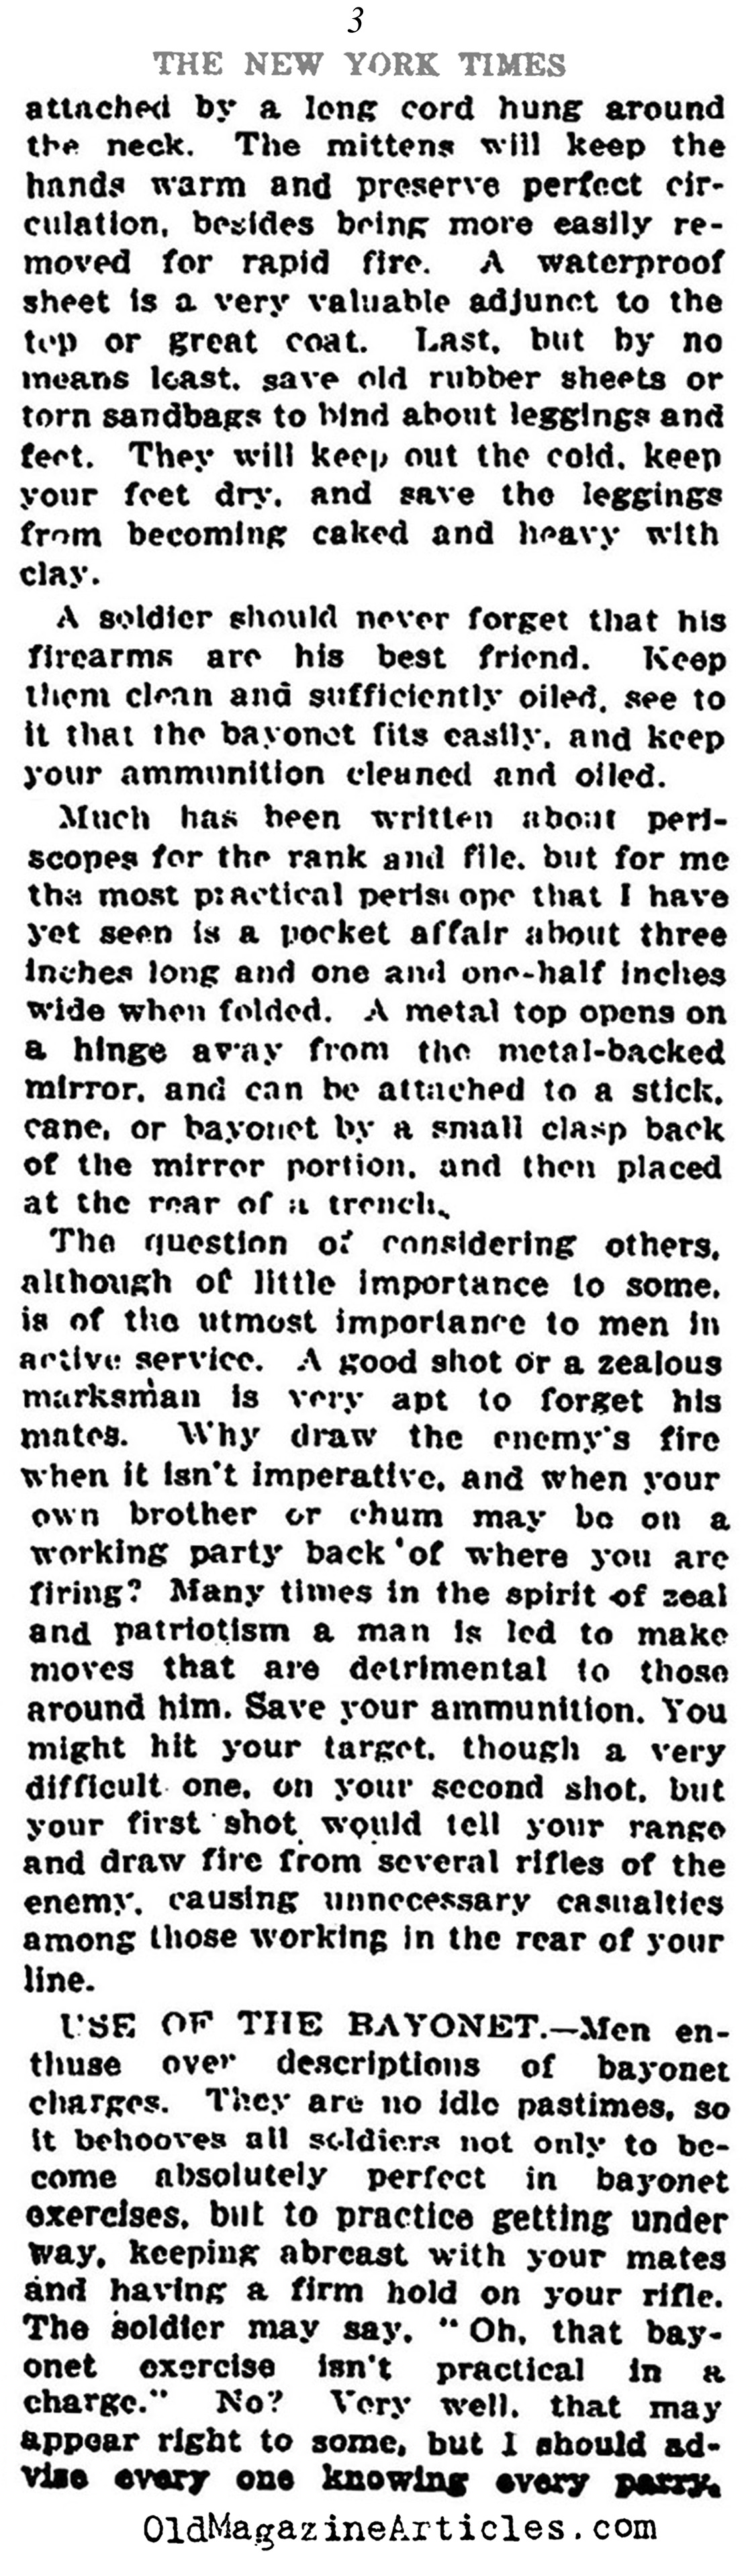 Trench Warfare Tips from a Veteran (NY Times, 1916)